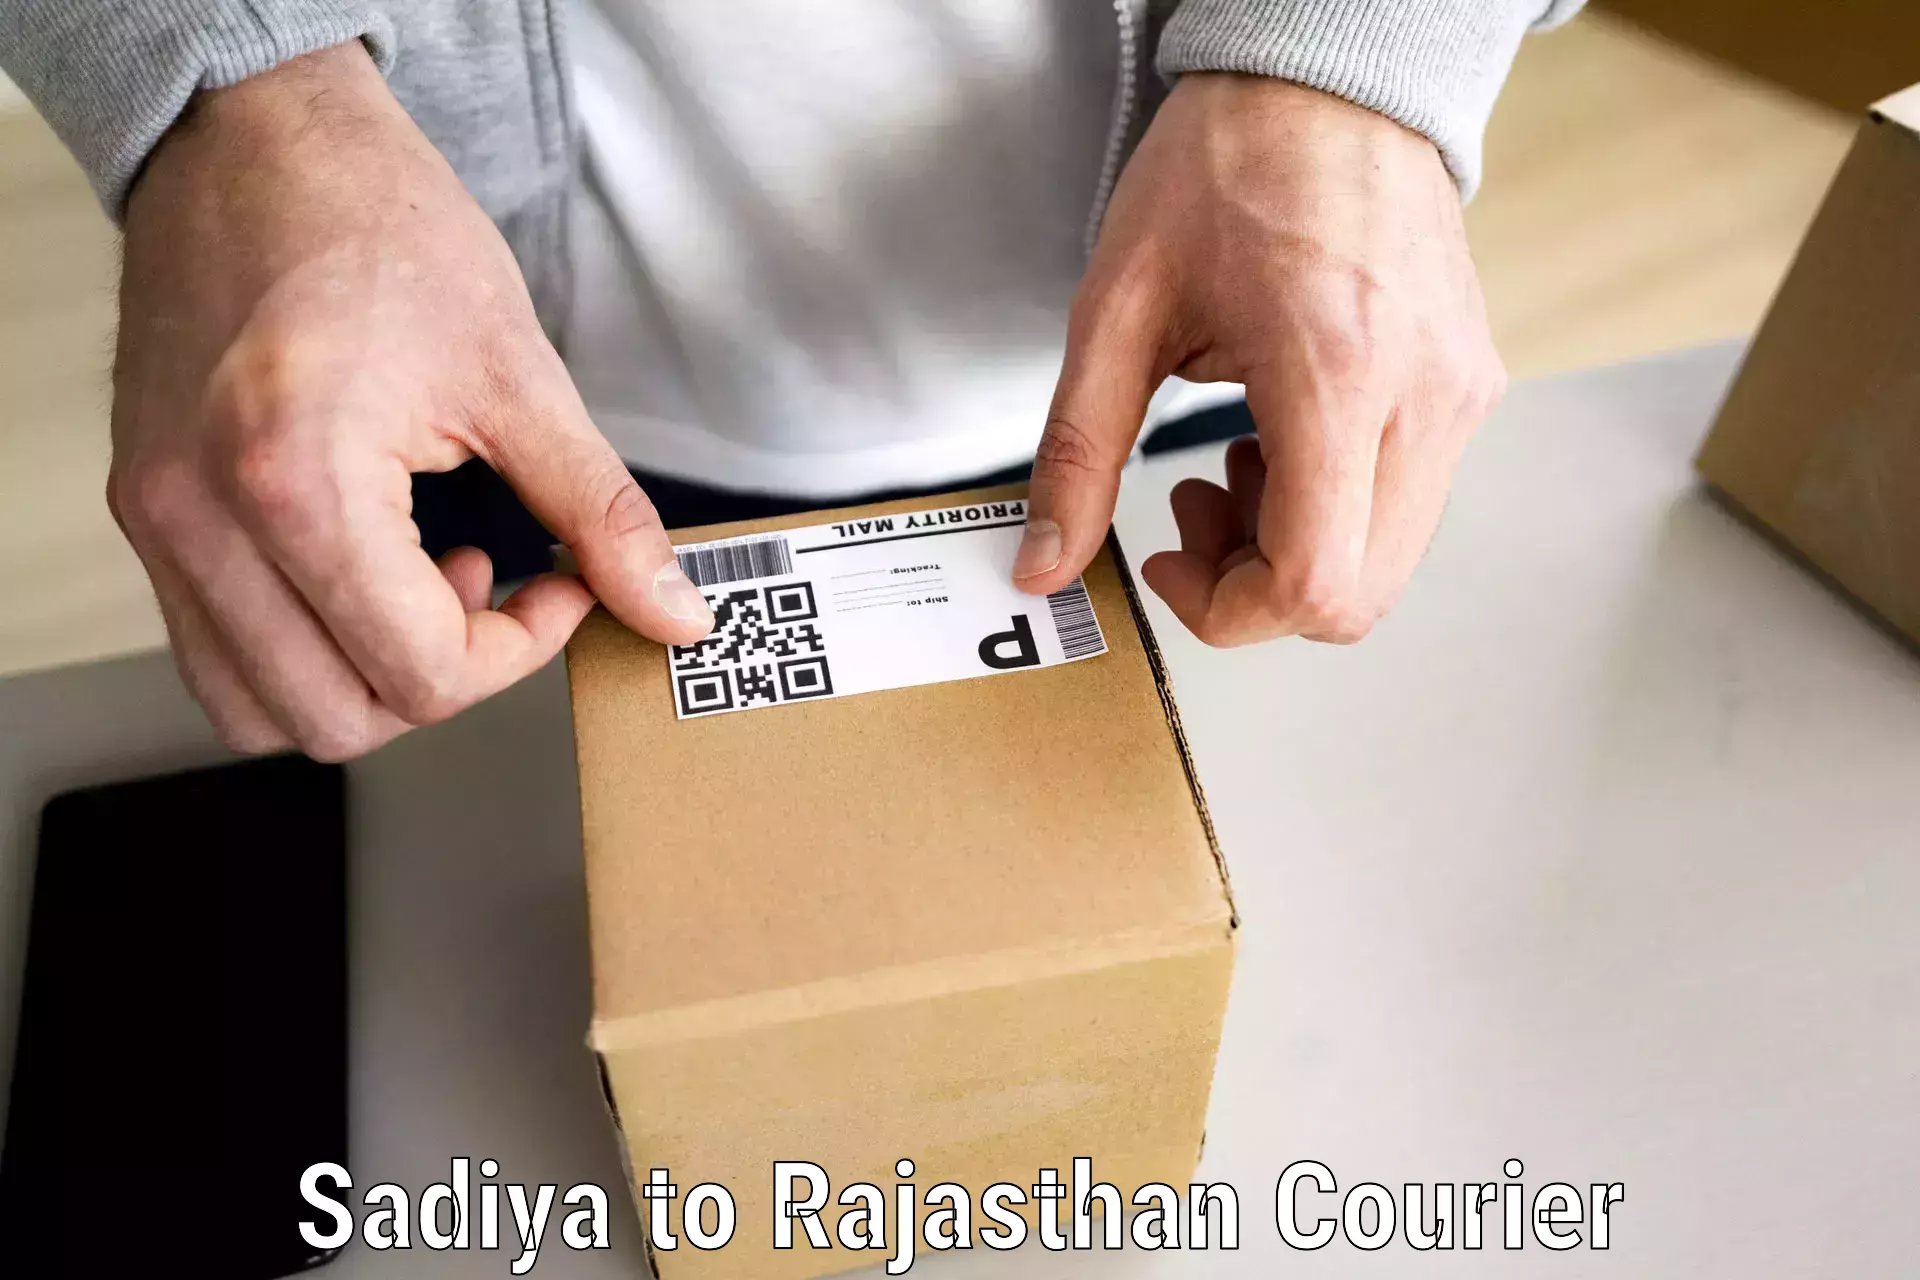 Furniture delivery service Sadiya to Udaipur